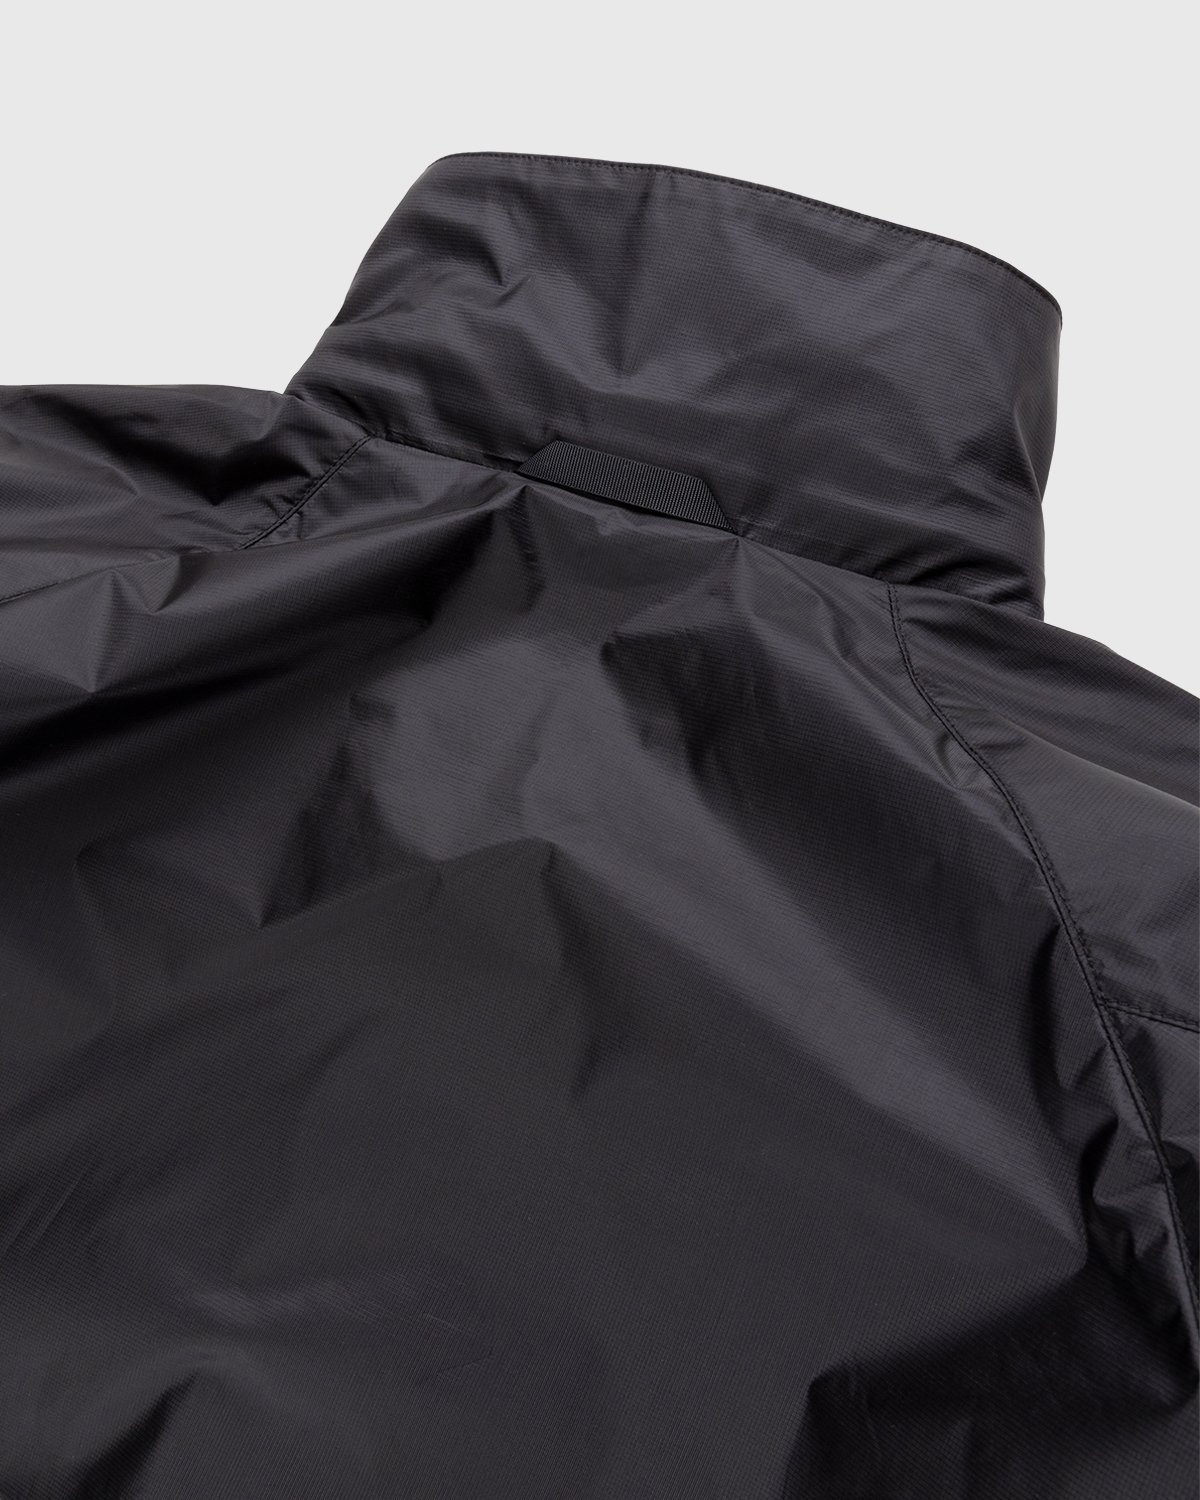 ACRONYM – J95-WS Jacket Black - Outerwear - Black - Image 3